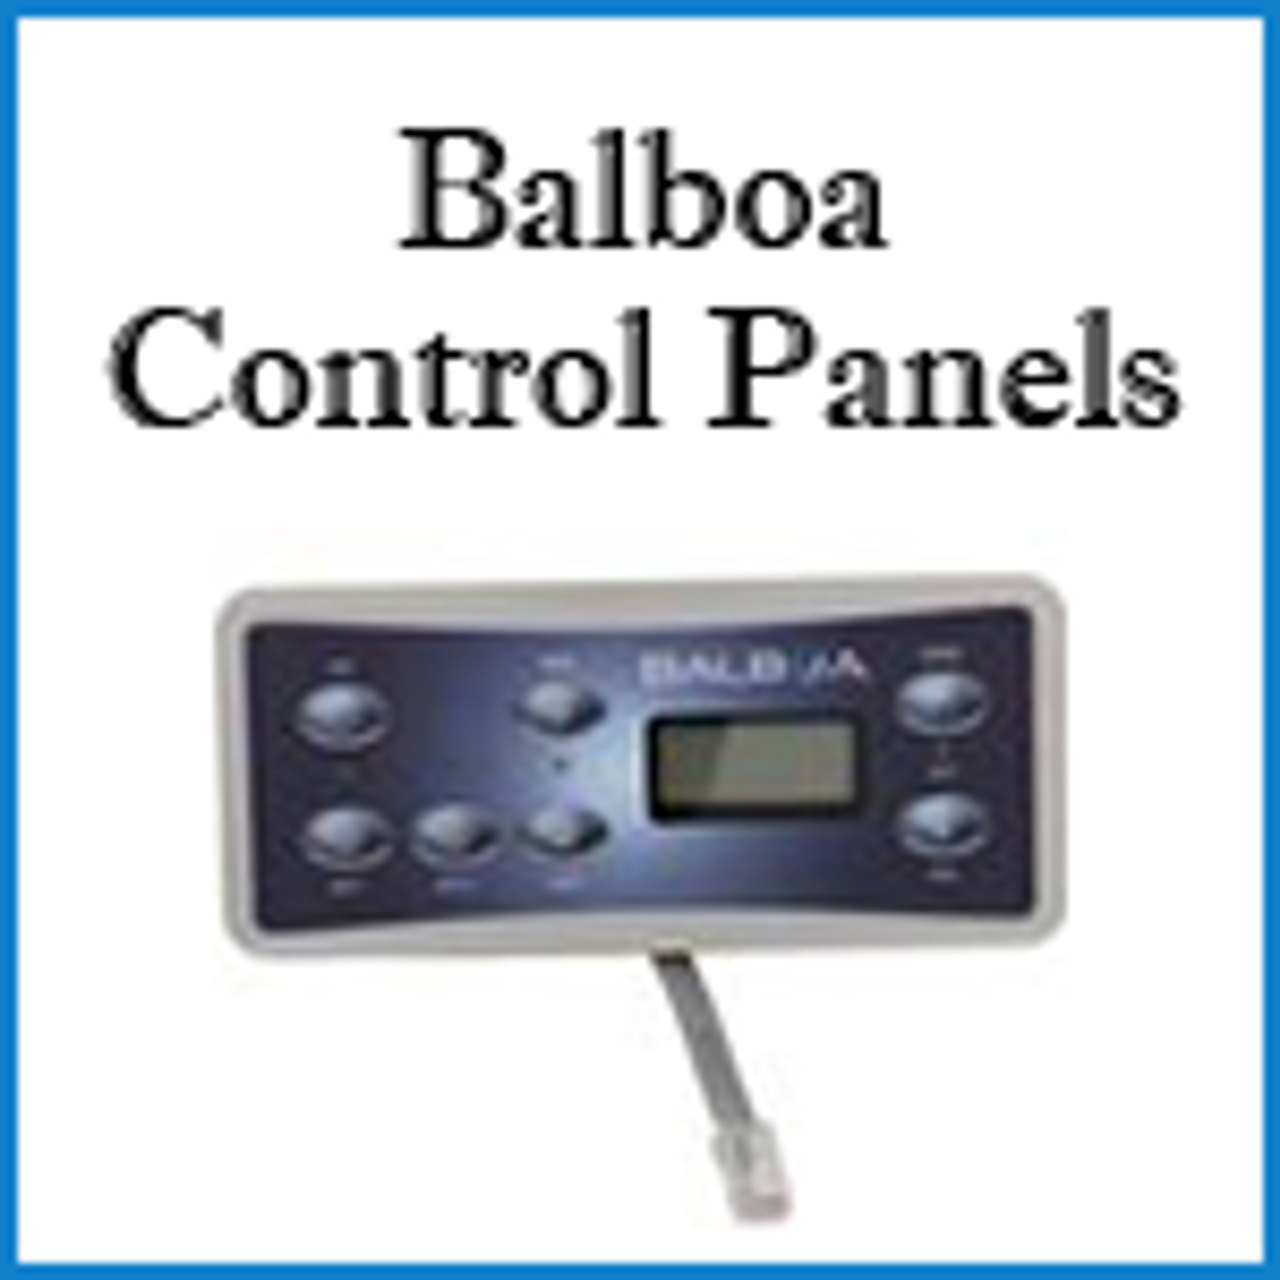 Balboa Control Panels